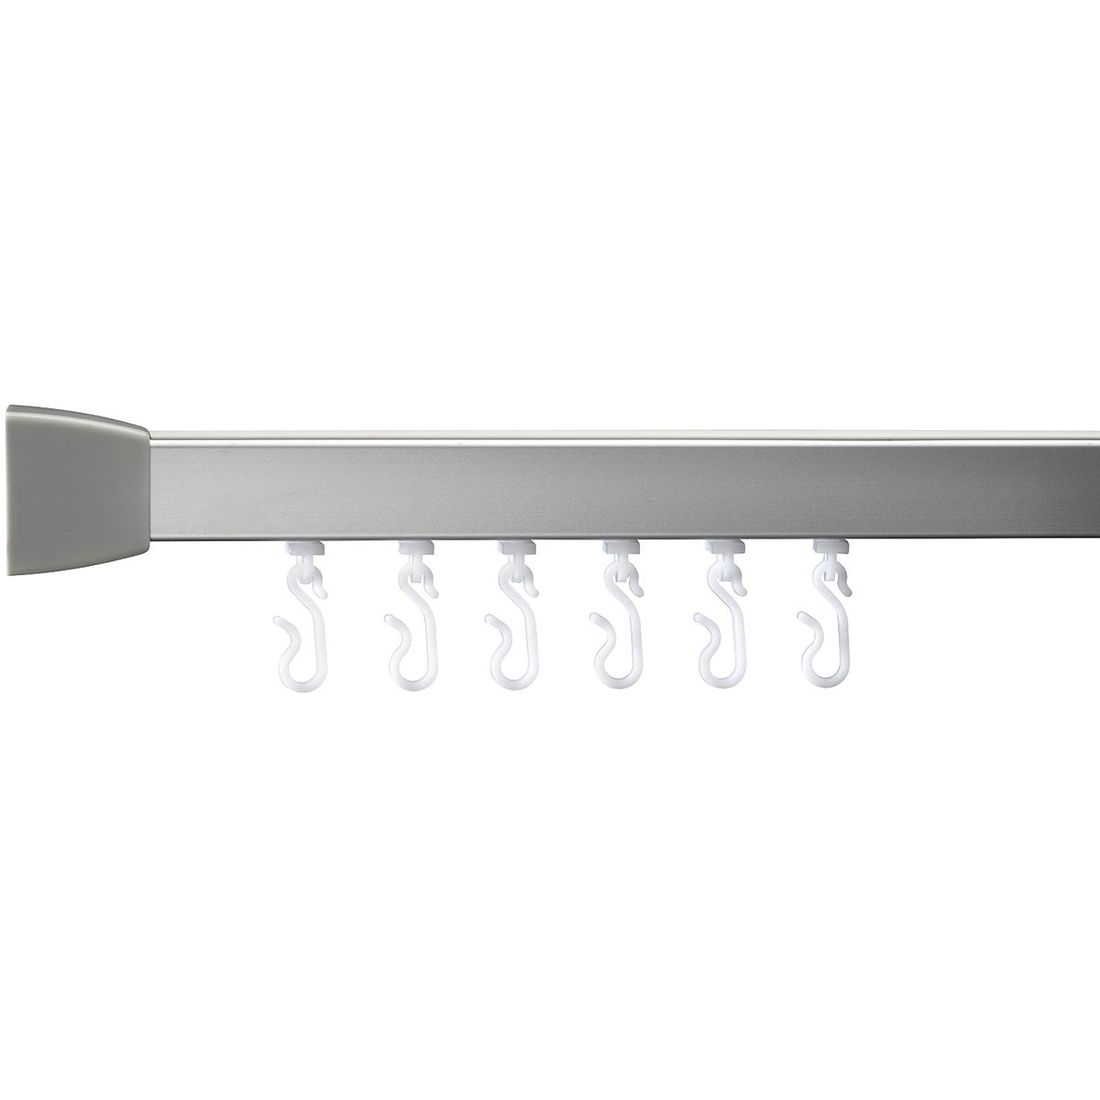 Slenderline Shower Curtain Rod 4 Way Rail Kit Silver Croydex